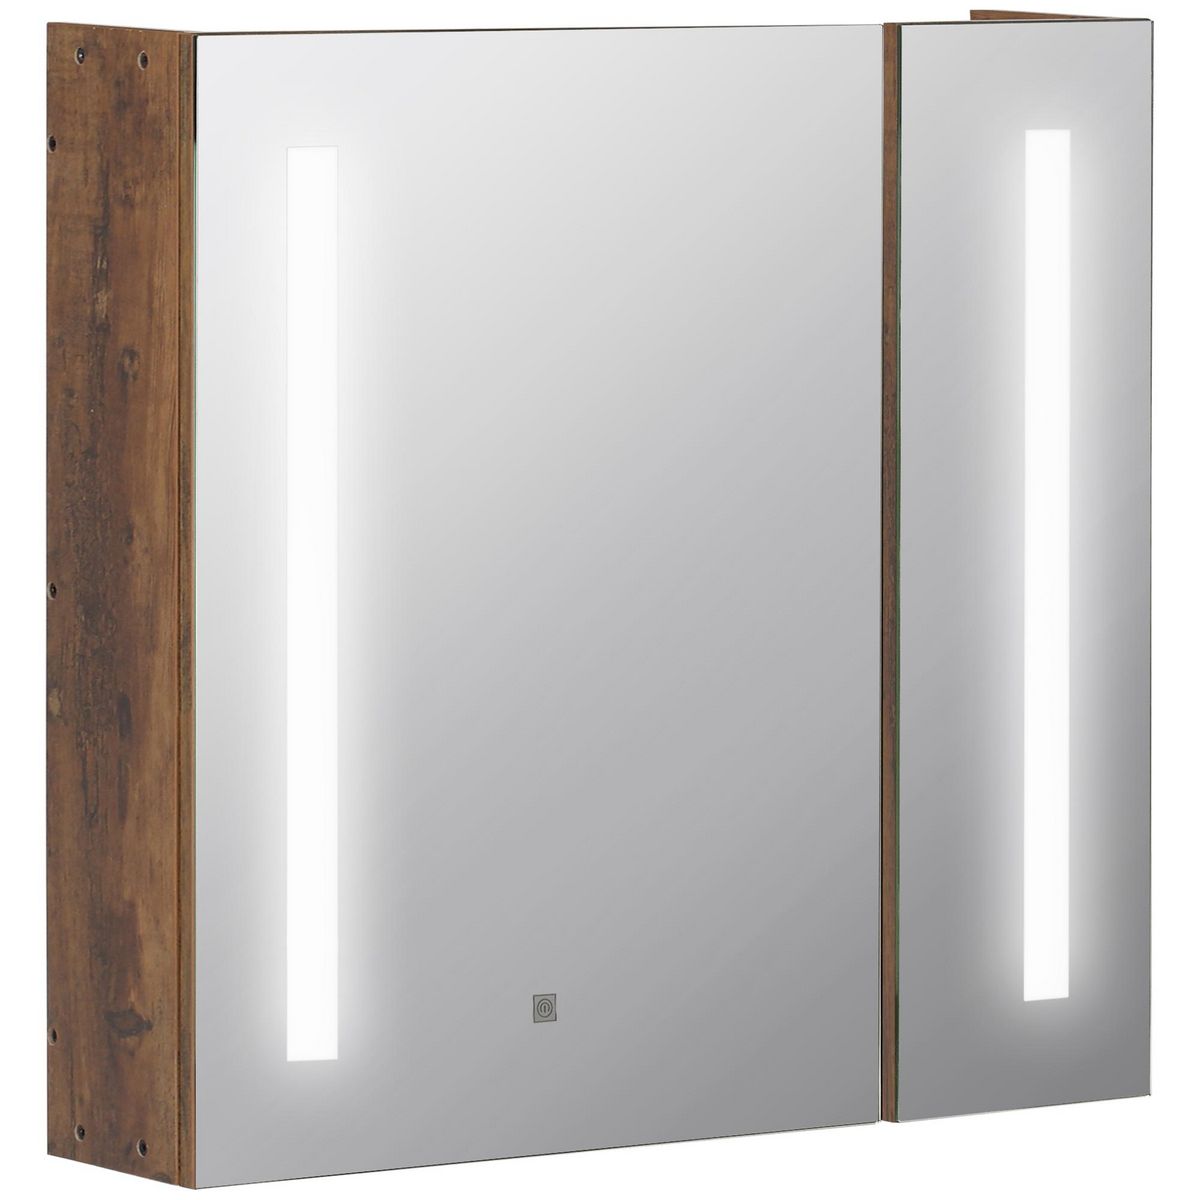 KLEANKIN Miroir lumineux LED armoire murale design de salle de bain 2 en 1 dim. 70L x 15l x 65H cm MDF aspect bois